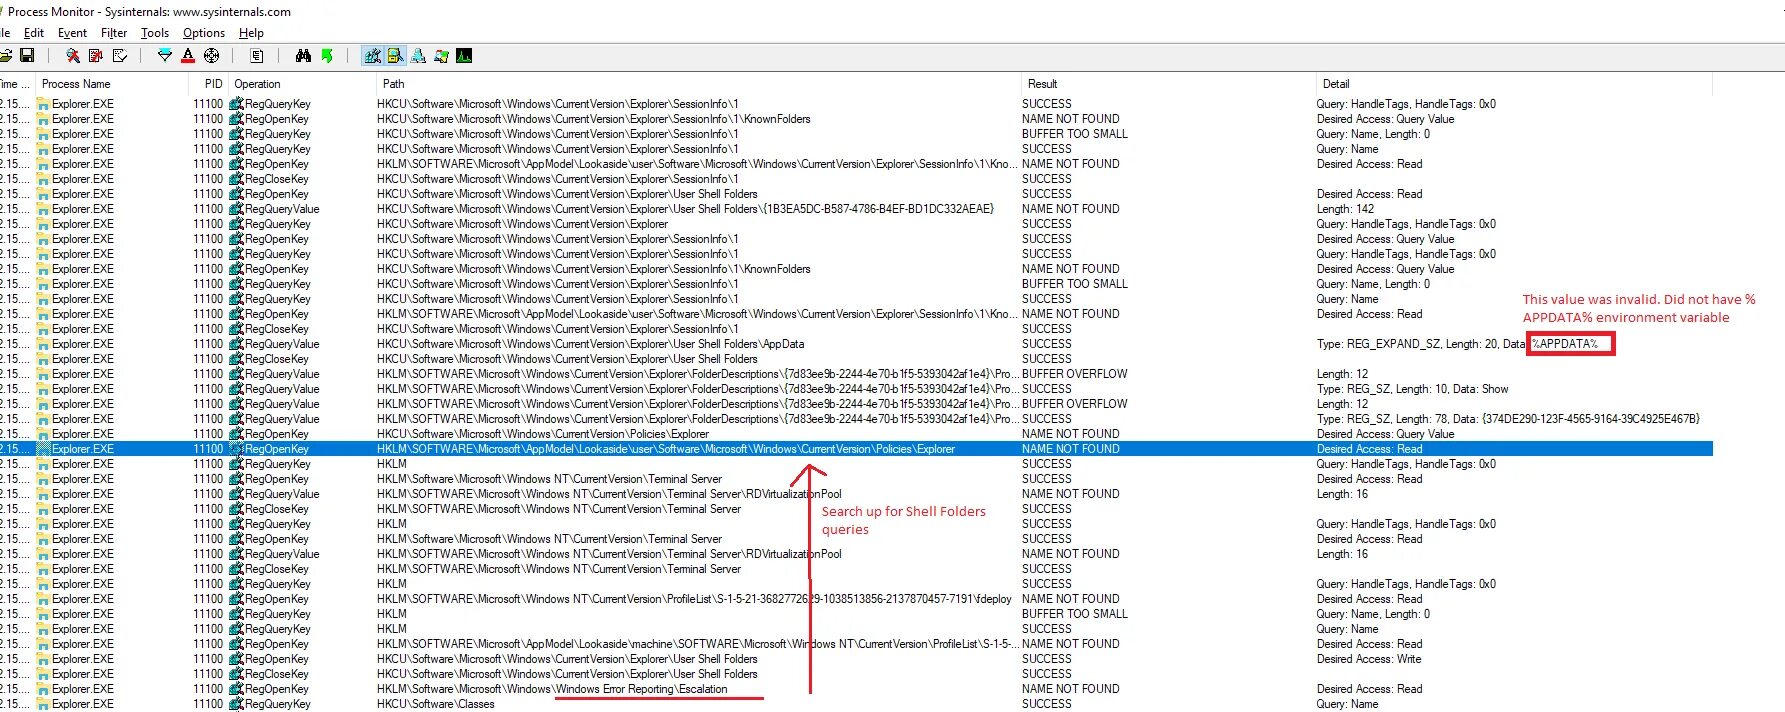 HKEY_current_user\software\Microsoft\Windows\CURRENTVERSION\Explorer\user Shell folders. HKCU\software\Microsoft\Windows\CURRENTVERSION\Explorer\user Shell folders. User Shell folders Windows 11. Path of the Explorer описание.